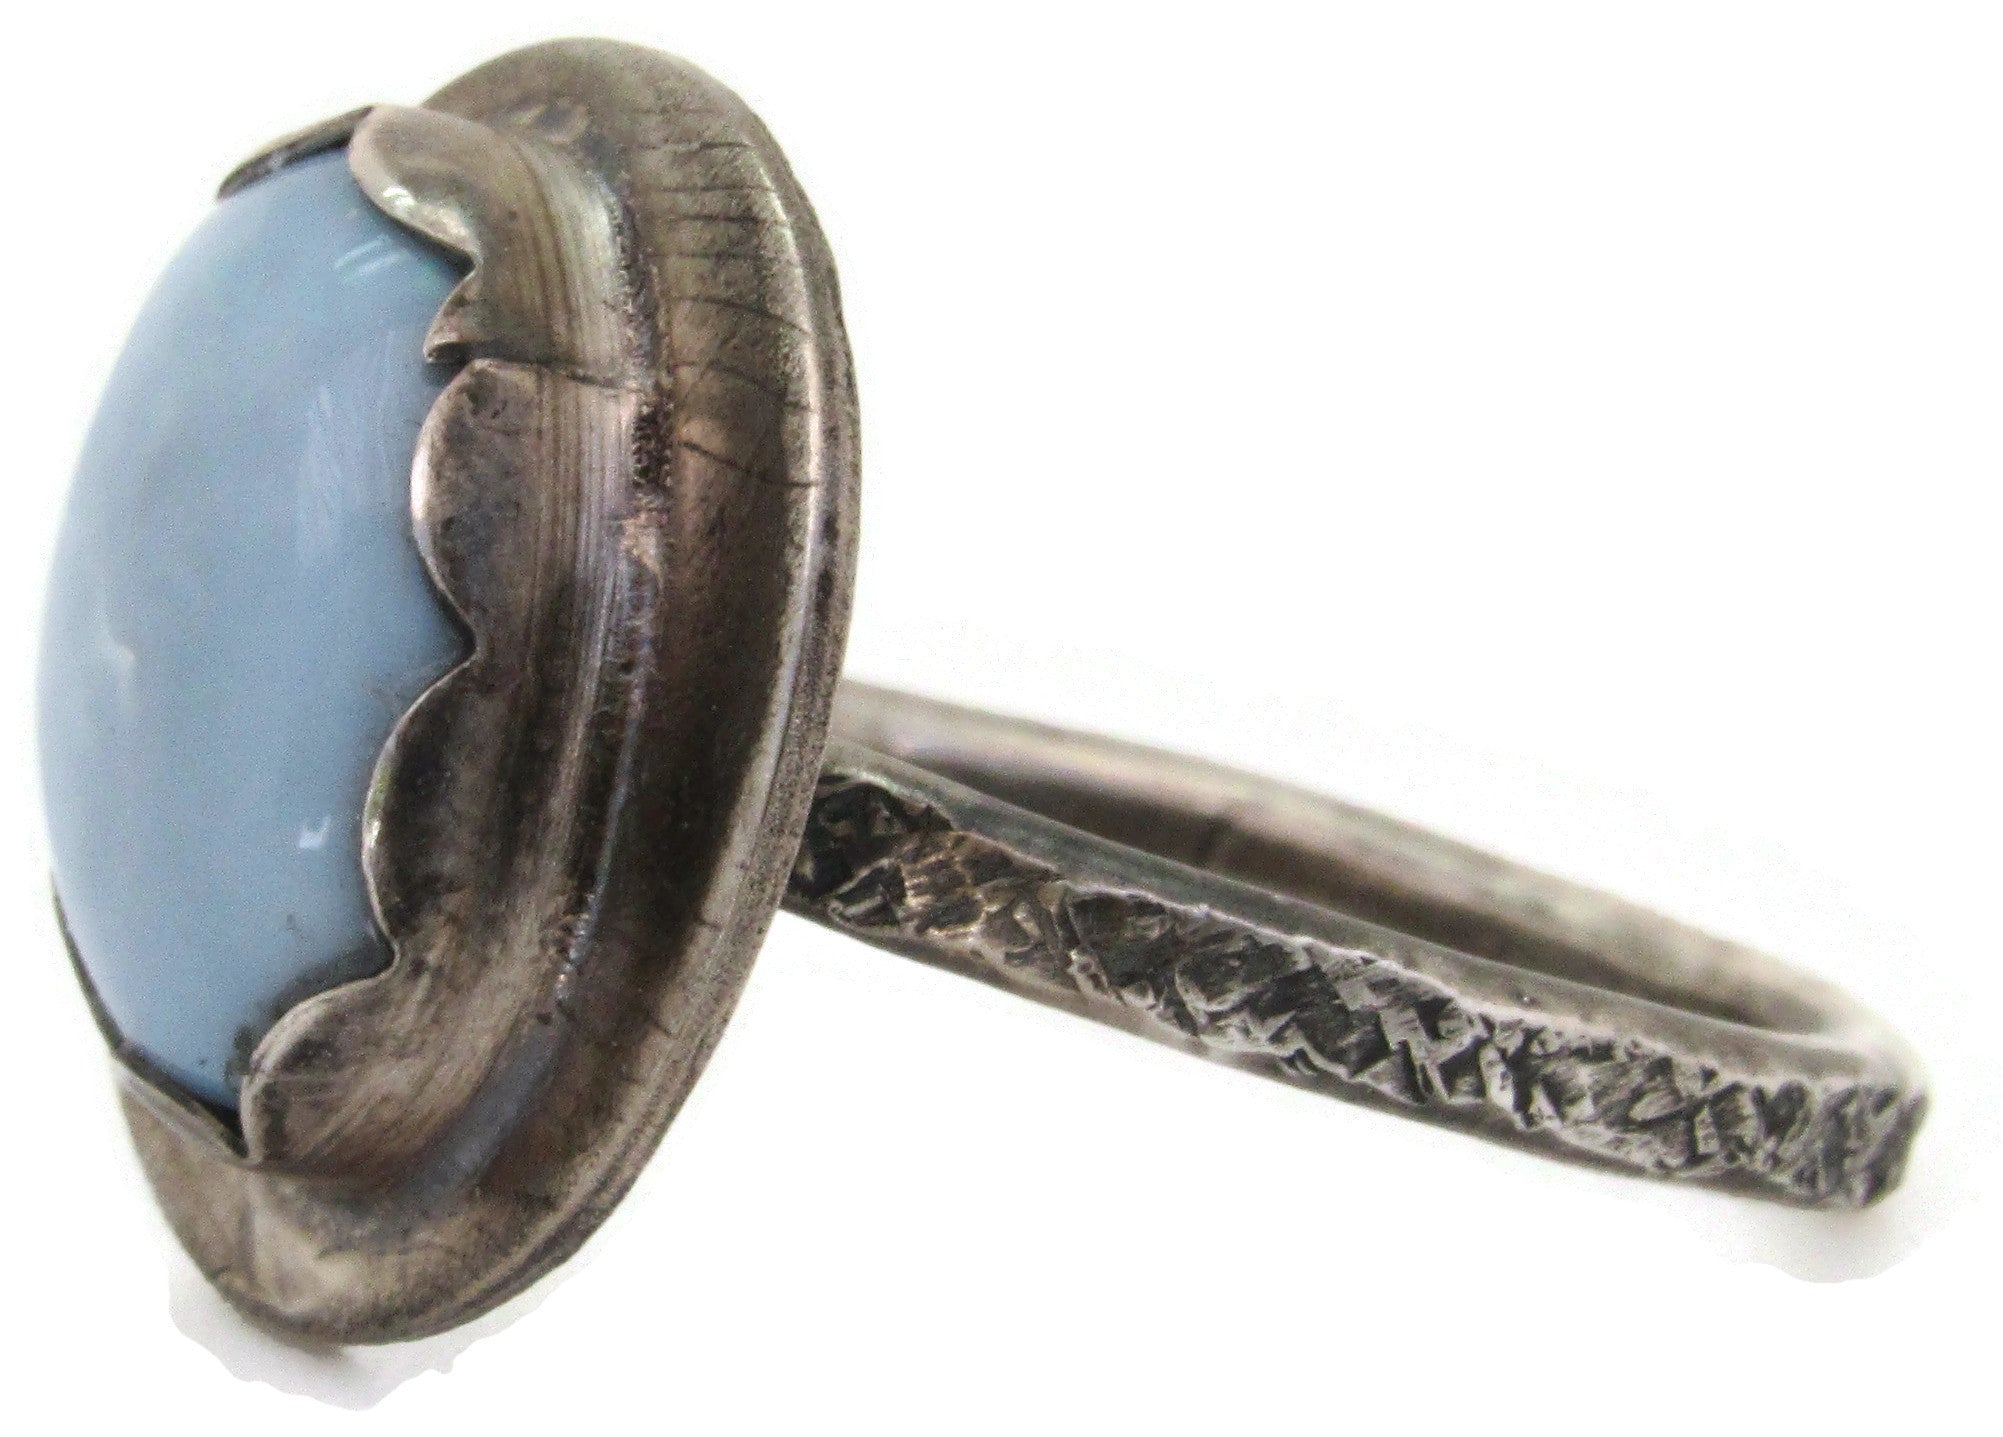 Petite Blue Opal Ring